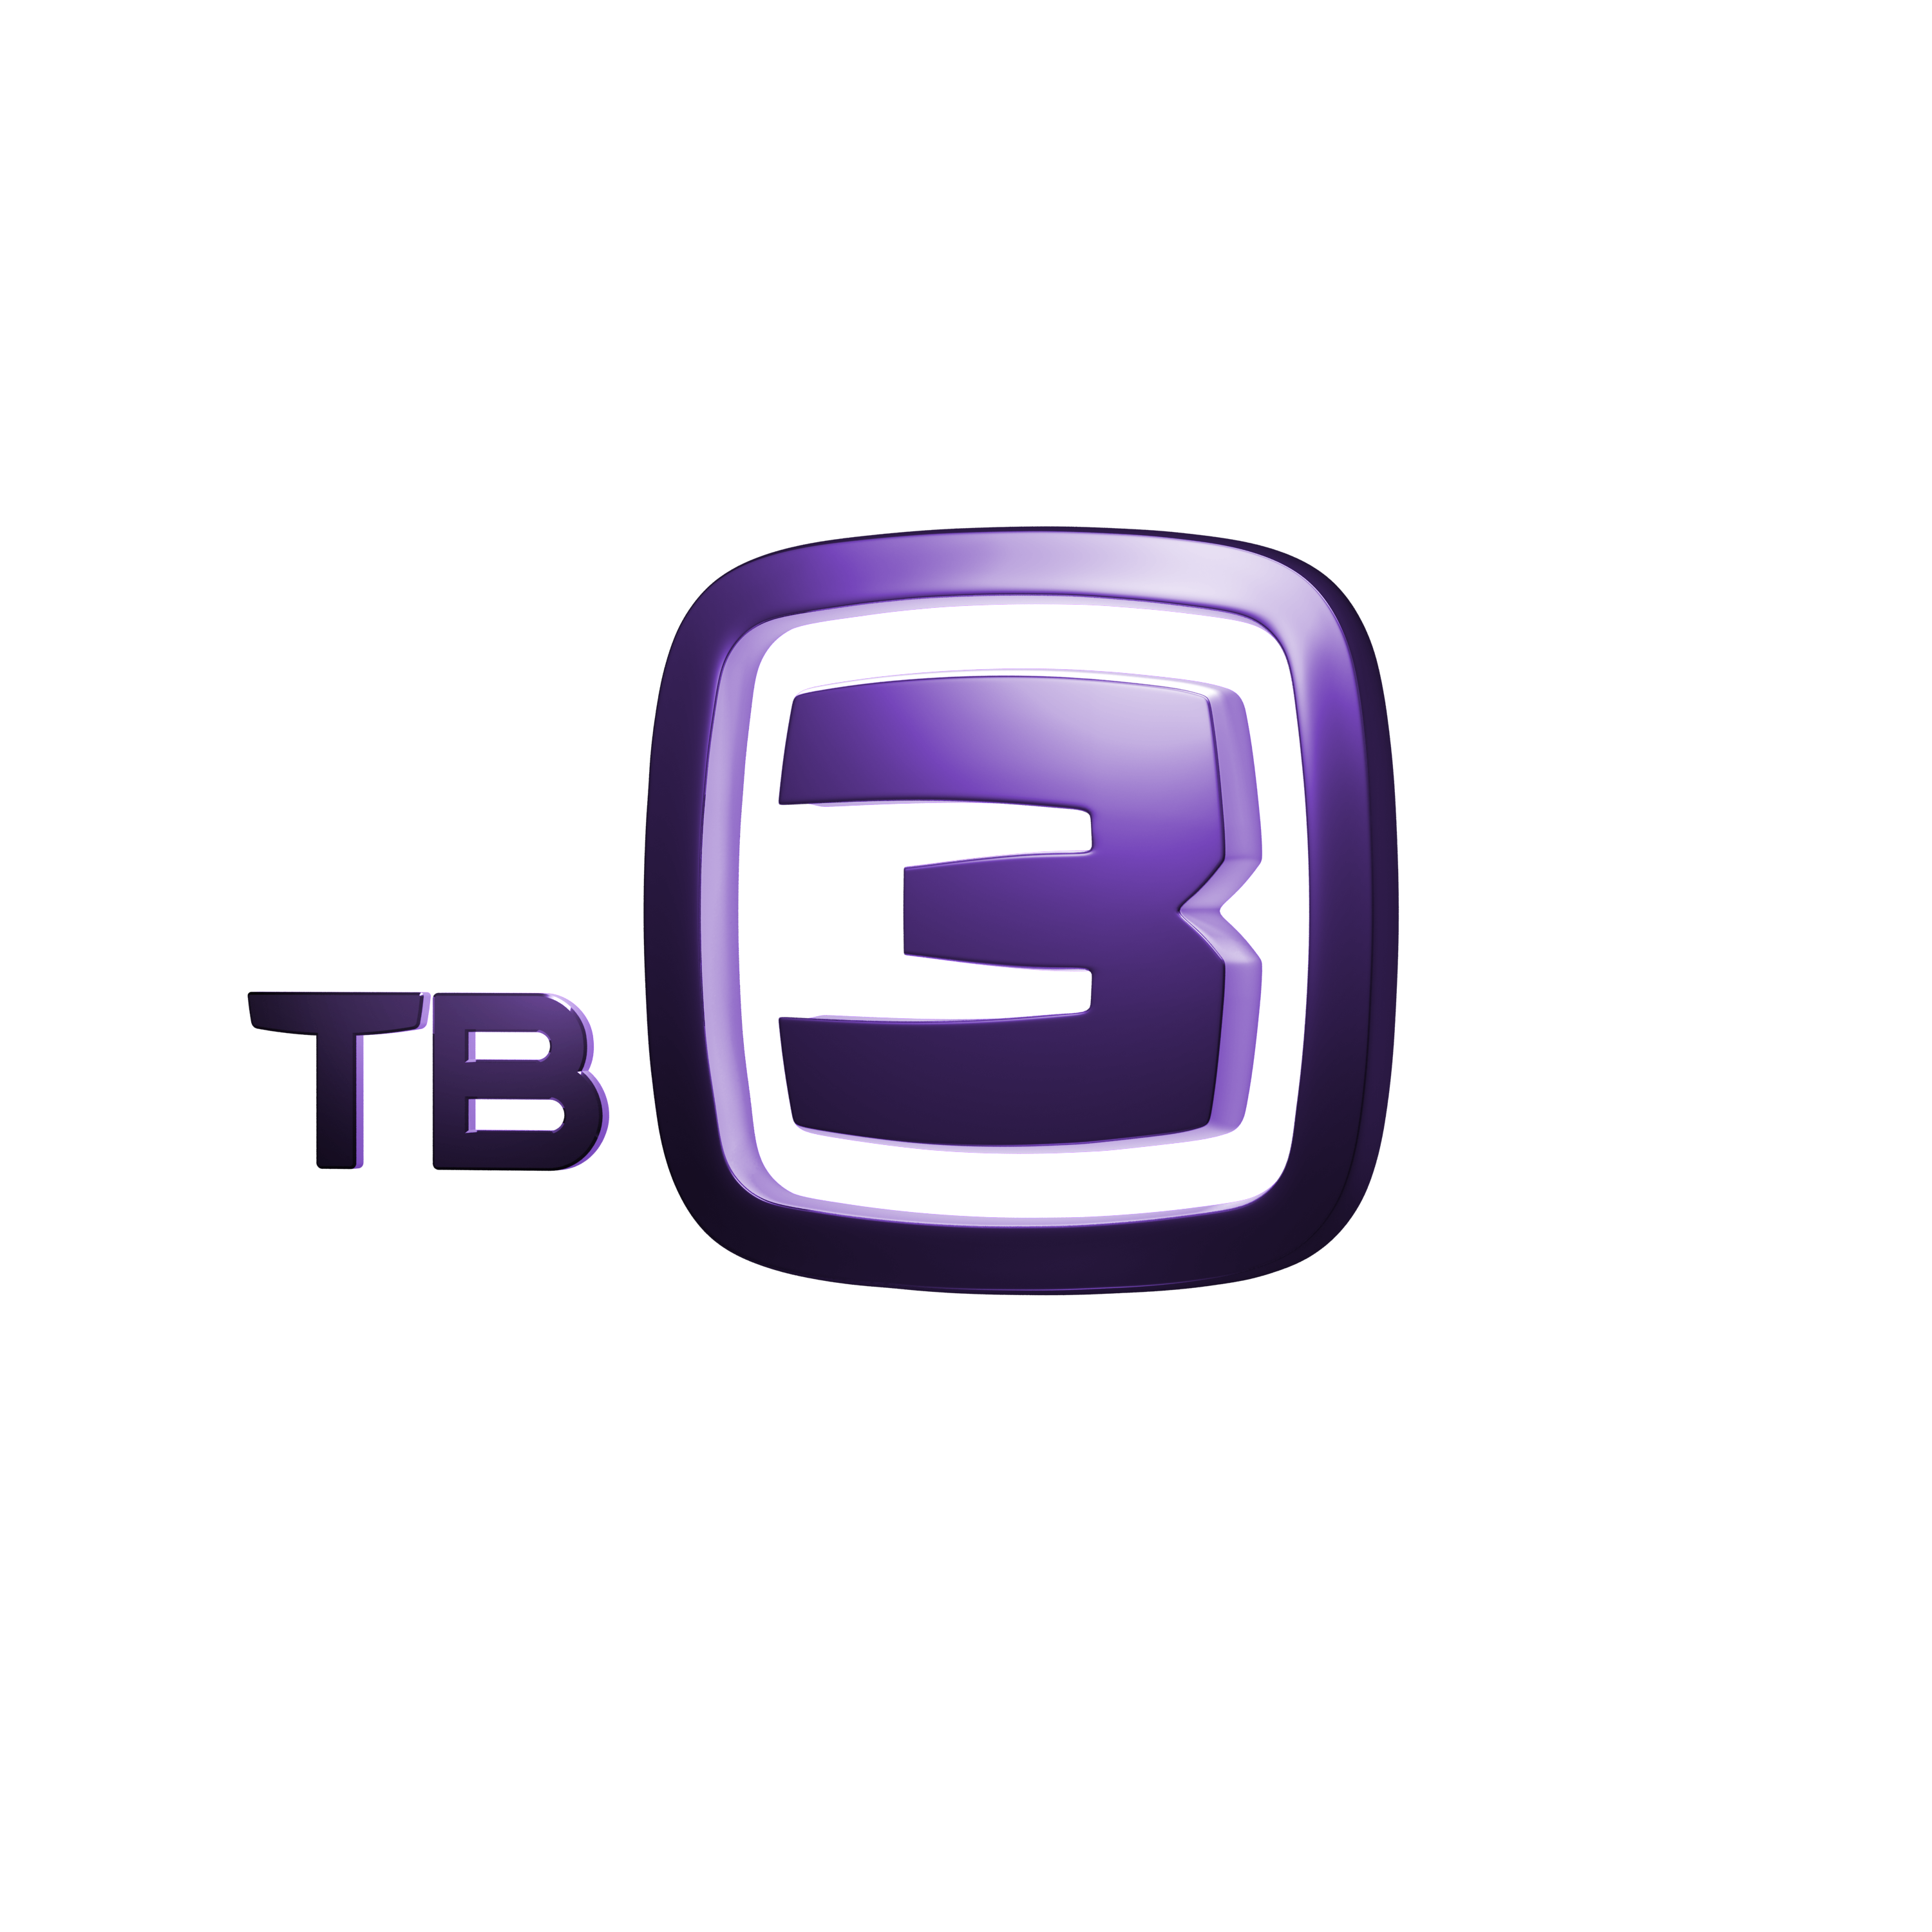 Tv3 3. Тв3 Телеканал логотип. Канал тв3. Эмблема канала тв3. Тв3 логотип 2015.